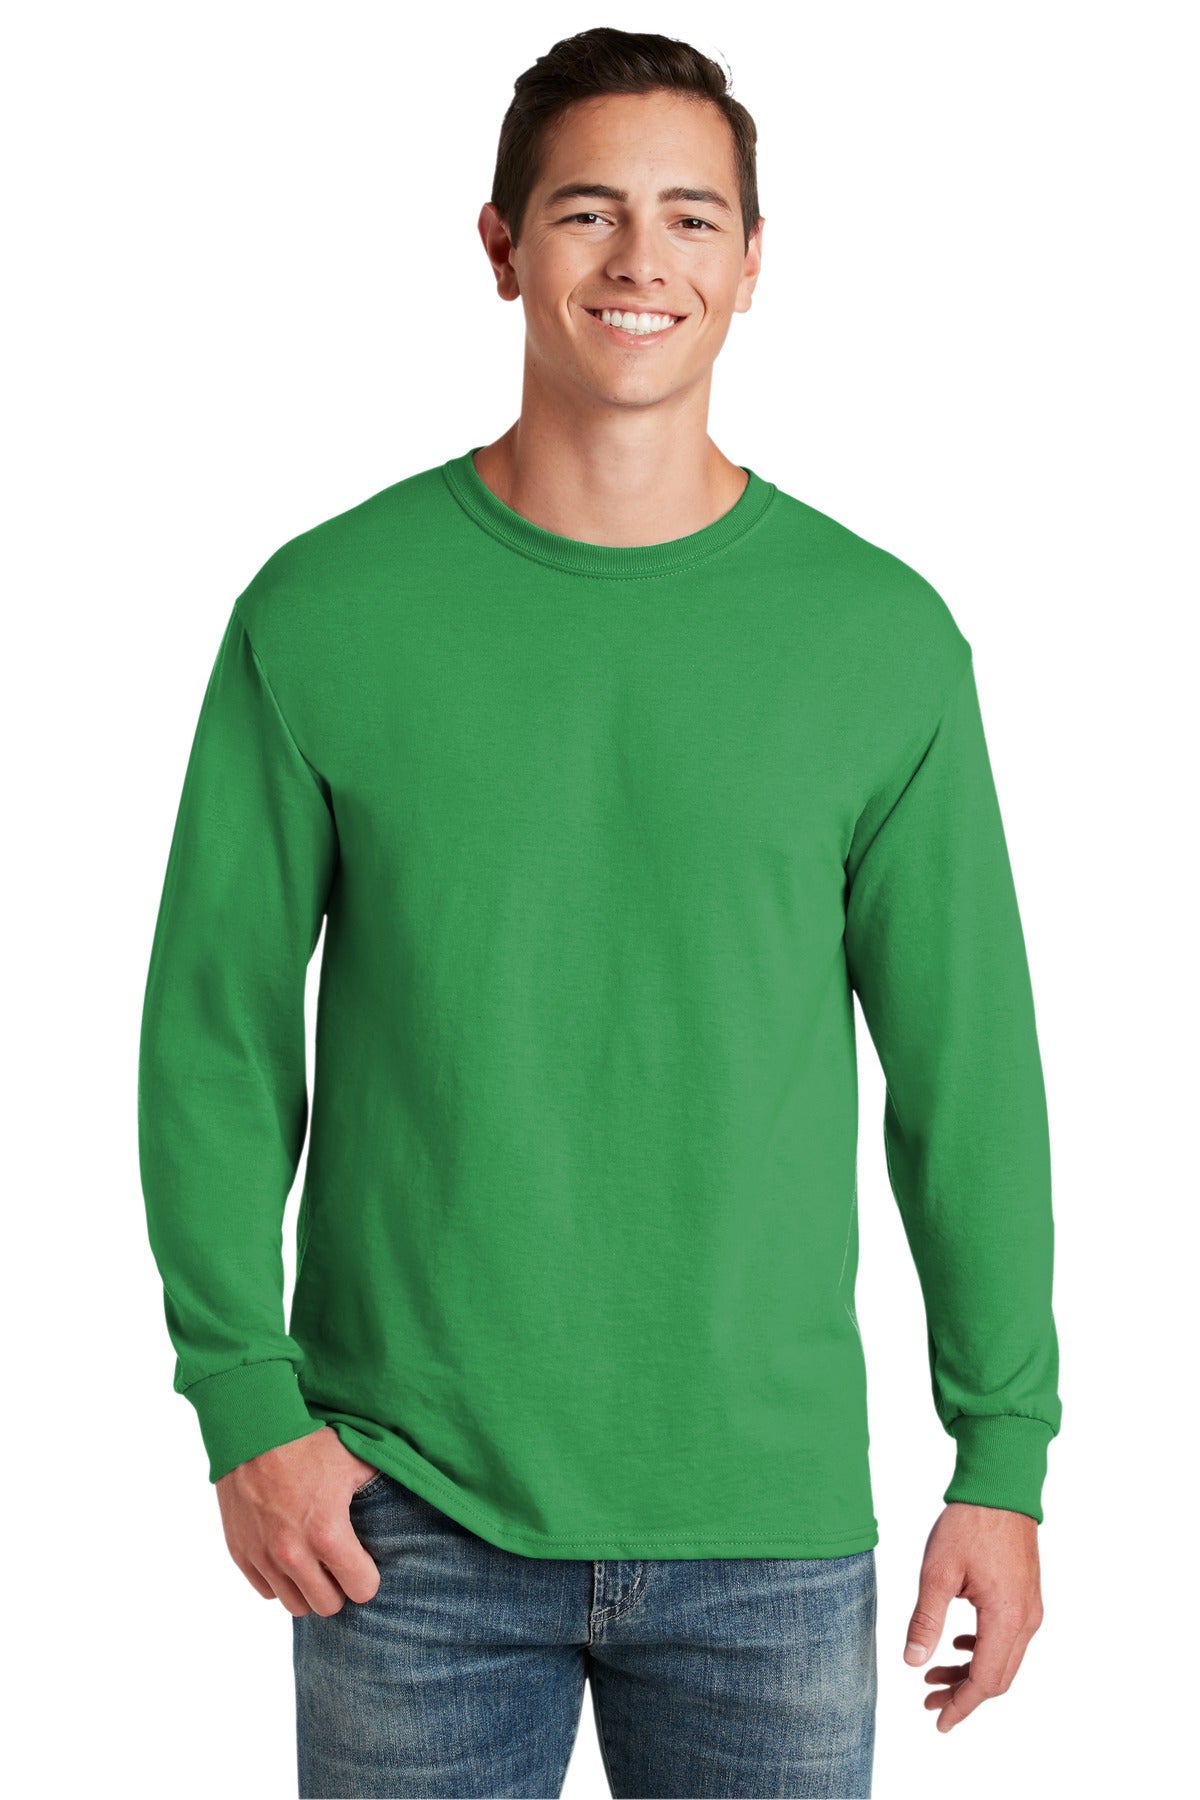 JERZEES® - Dri-Power® 50/50 Cotton/Poly Long Sleeve T-Shirt. 29LS [Kelly] - DFW Impression